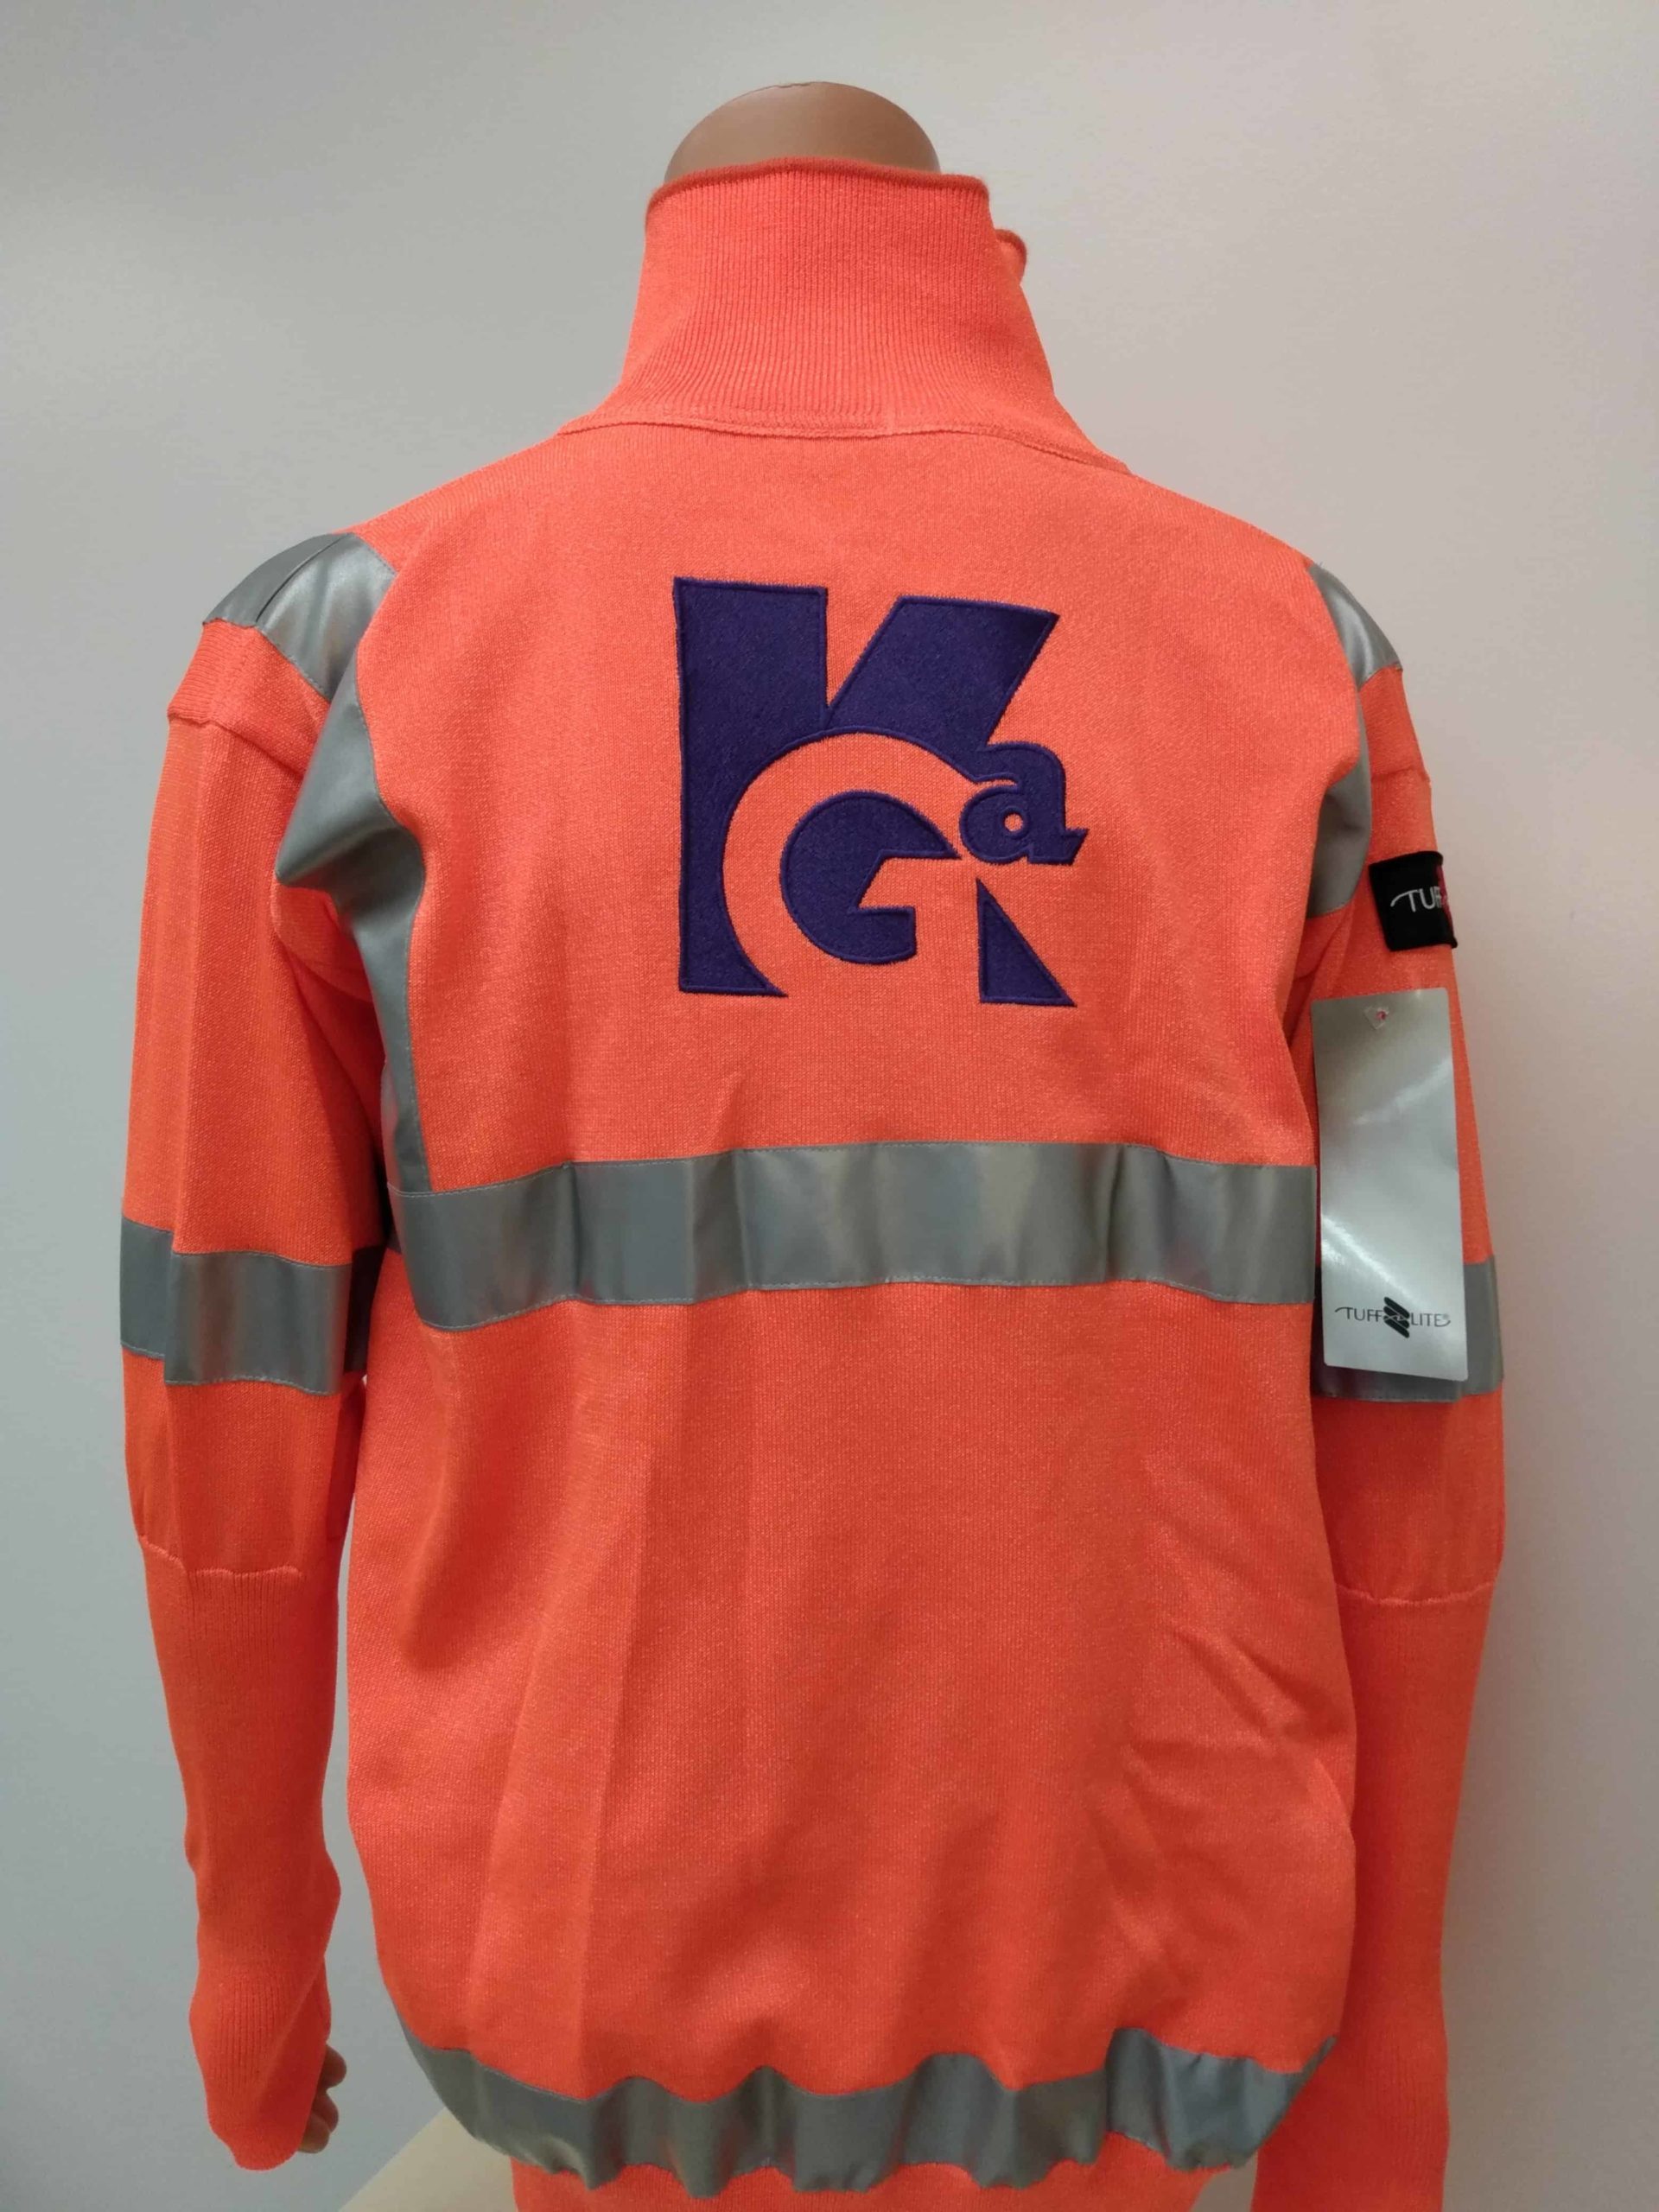 KGA Keel Jacket (Hi-Viz Orange) - Tuff-N-Lite®